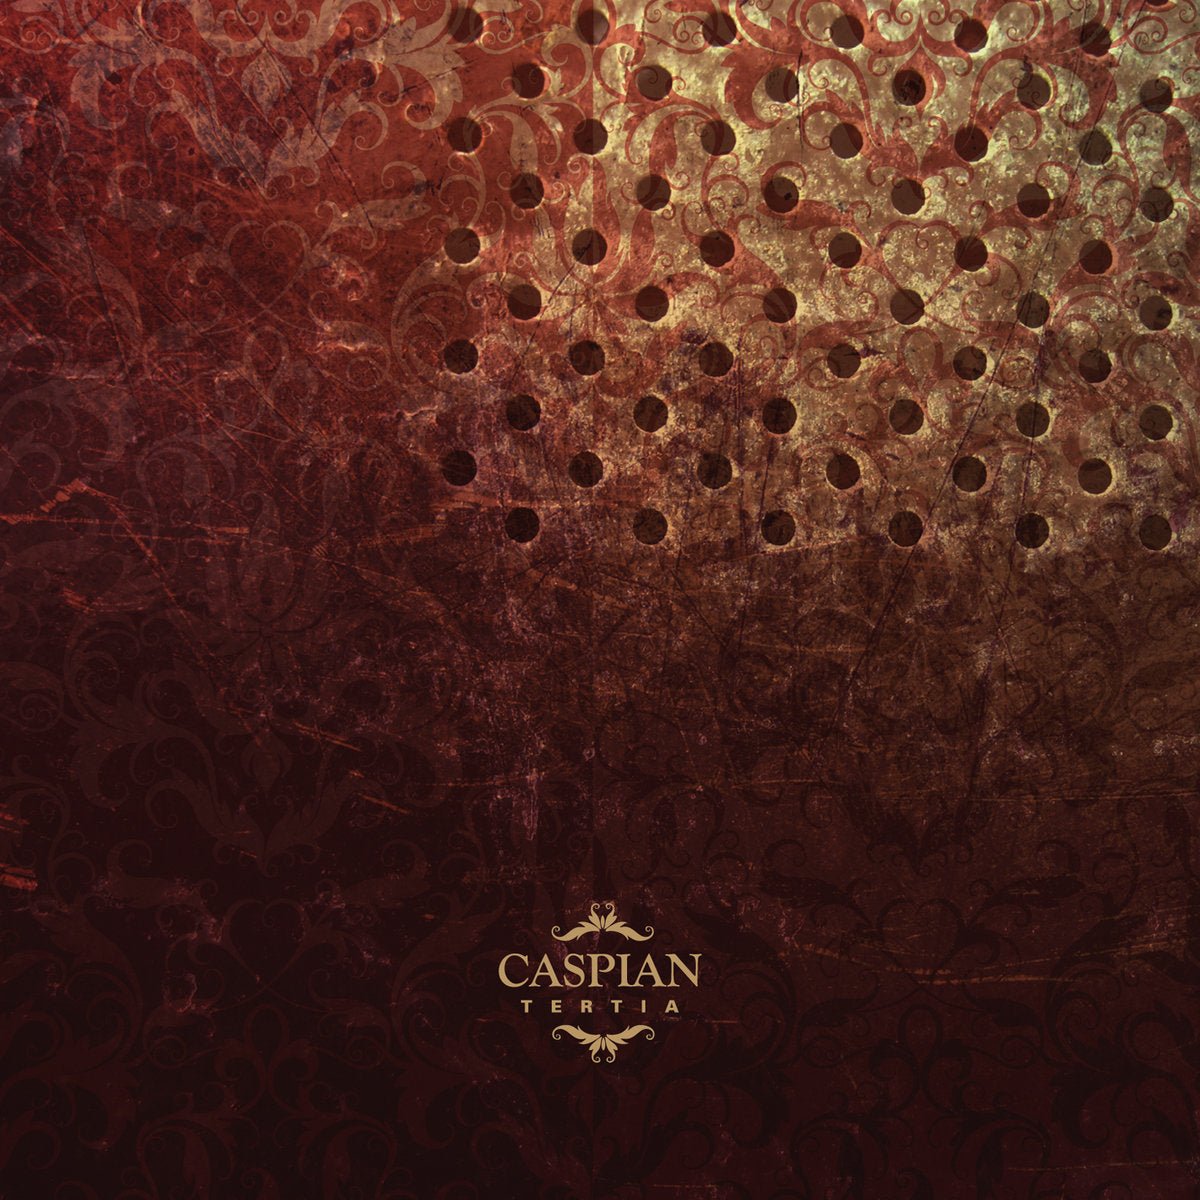 Caspian - Tertia LP - Vinyl - Dark Operative